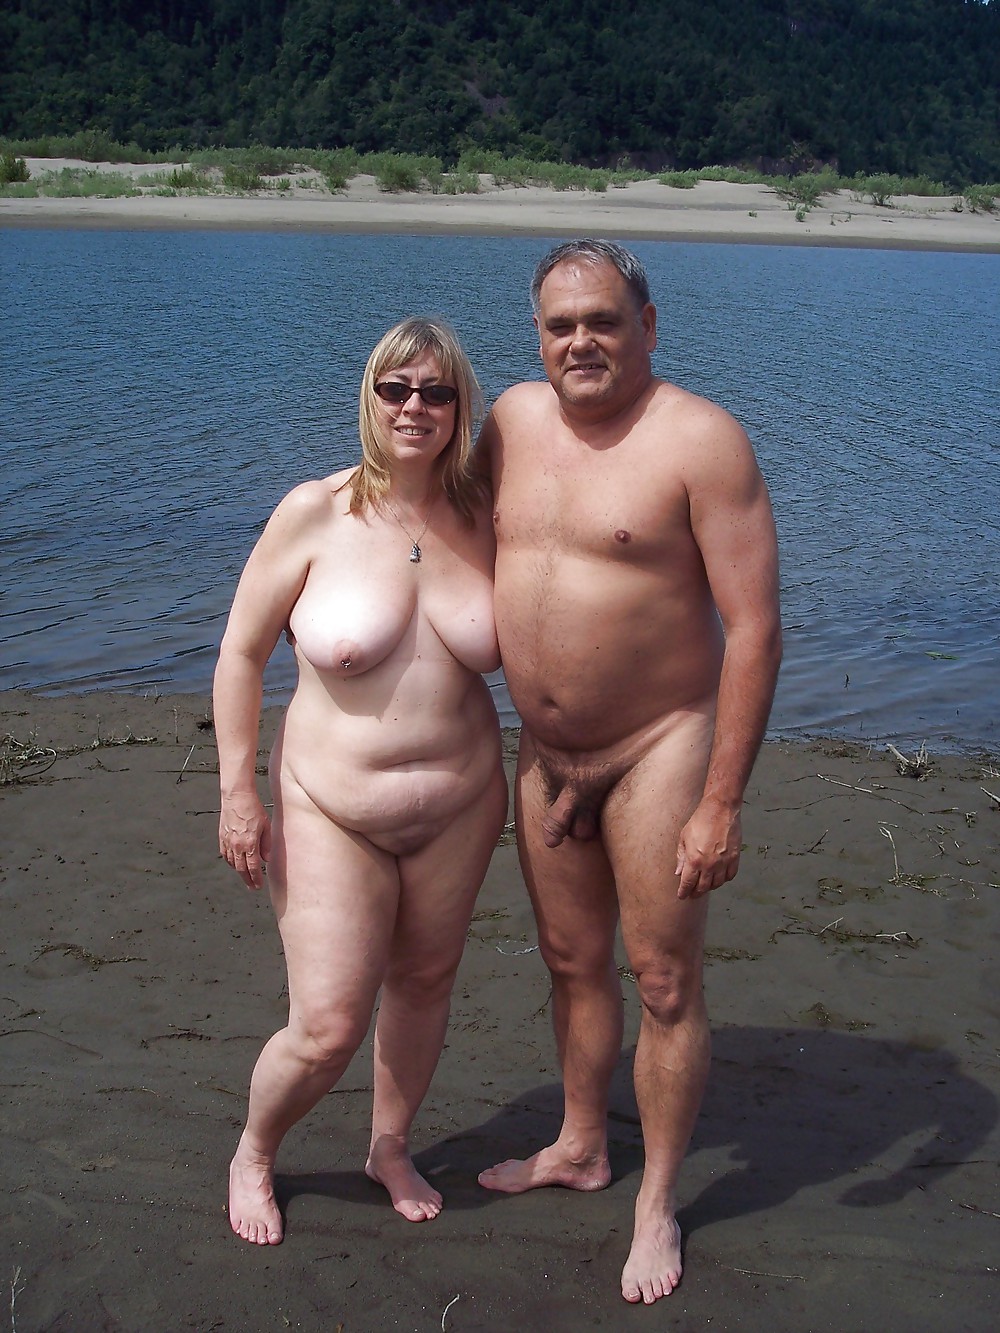 https://www.nudismlife.com/galleries/nudists_and_nude/nudists_couple/nudists_nude_naturists_couple_1098.jpg